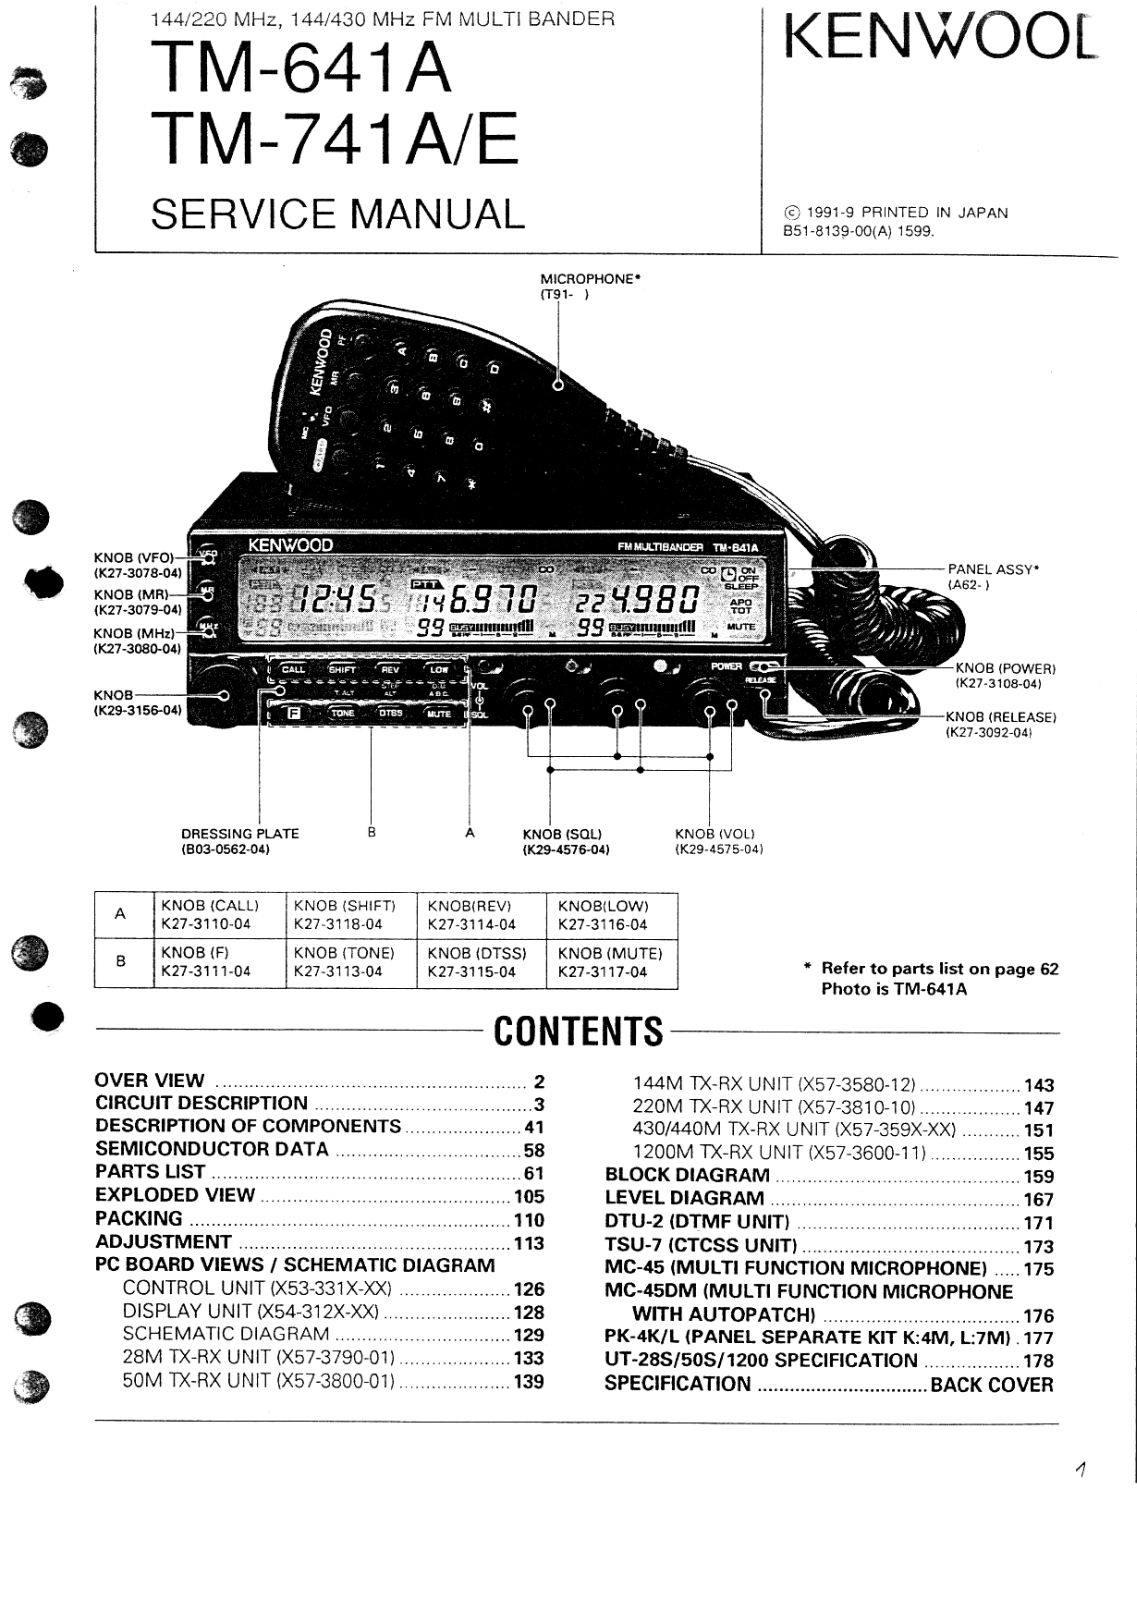 Kenwood TM-741E, TM-741A, TM-641A Service Manual